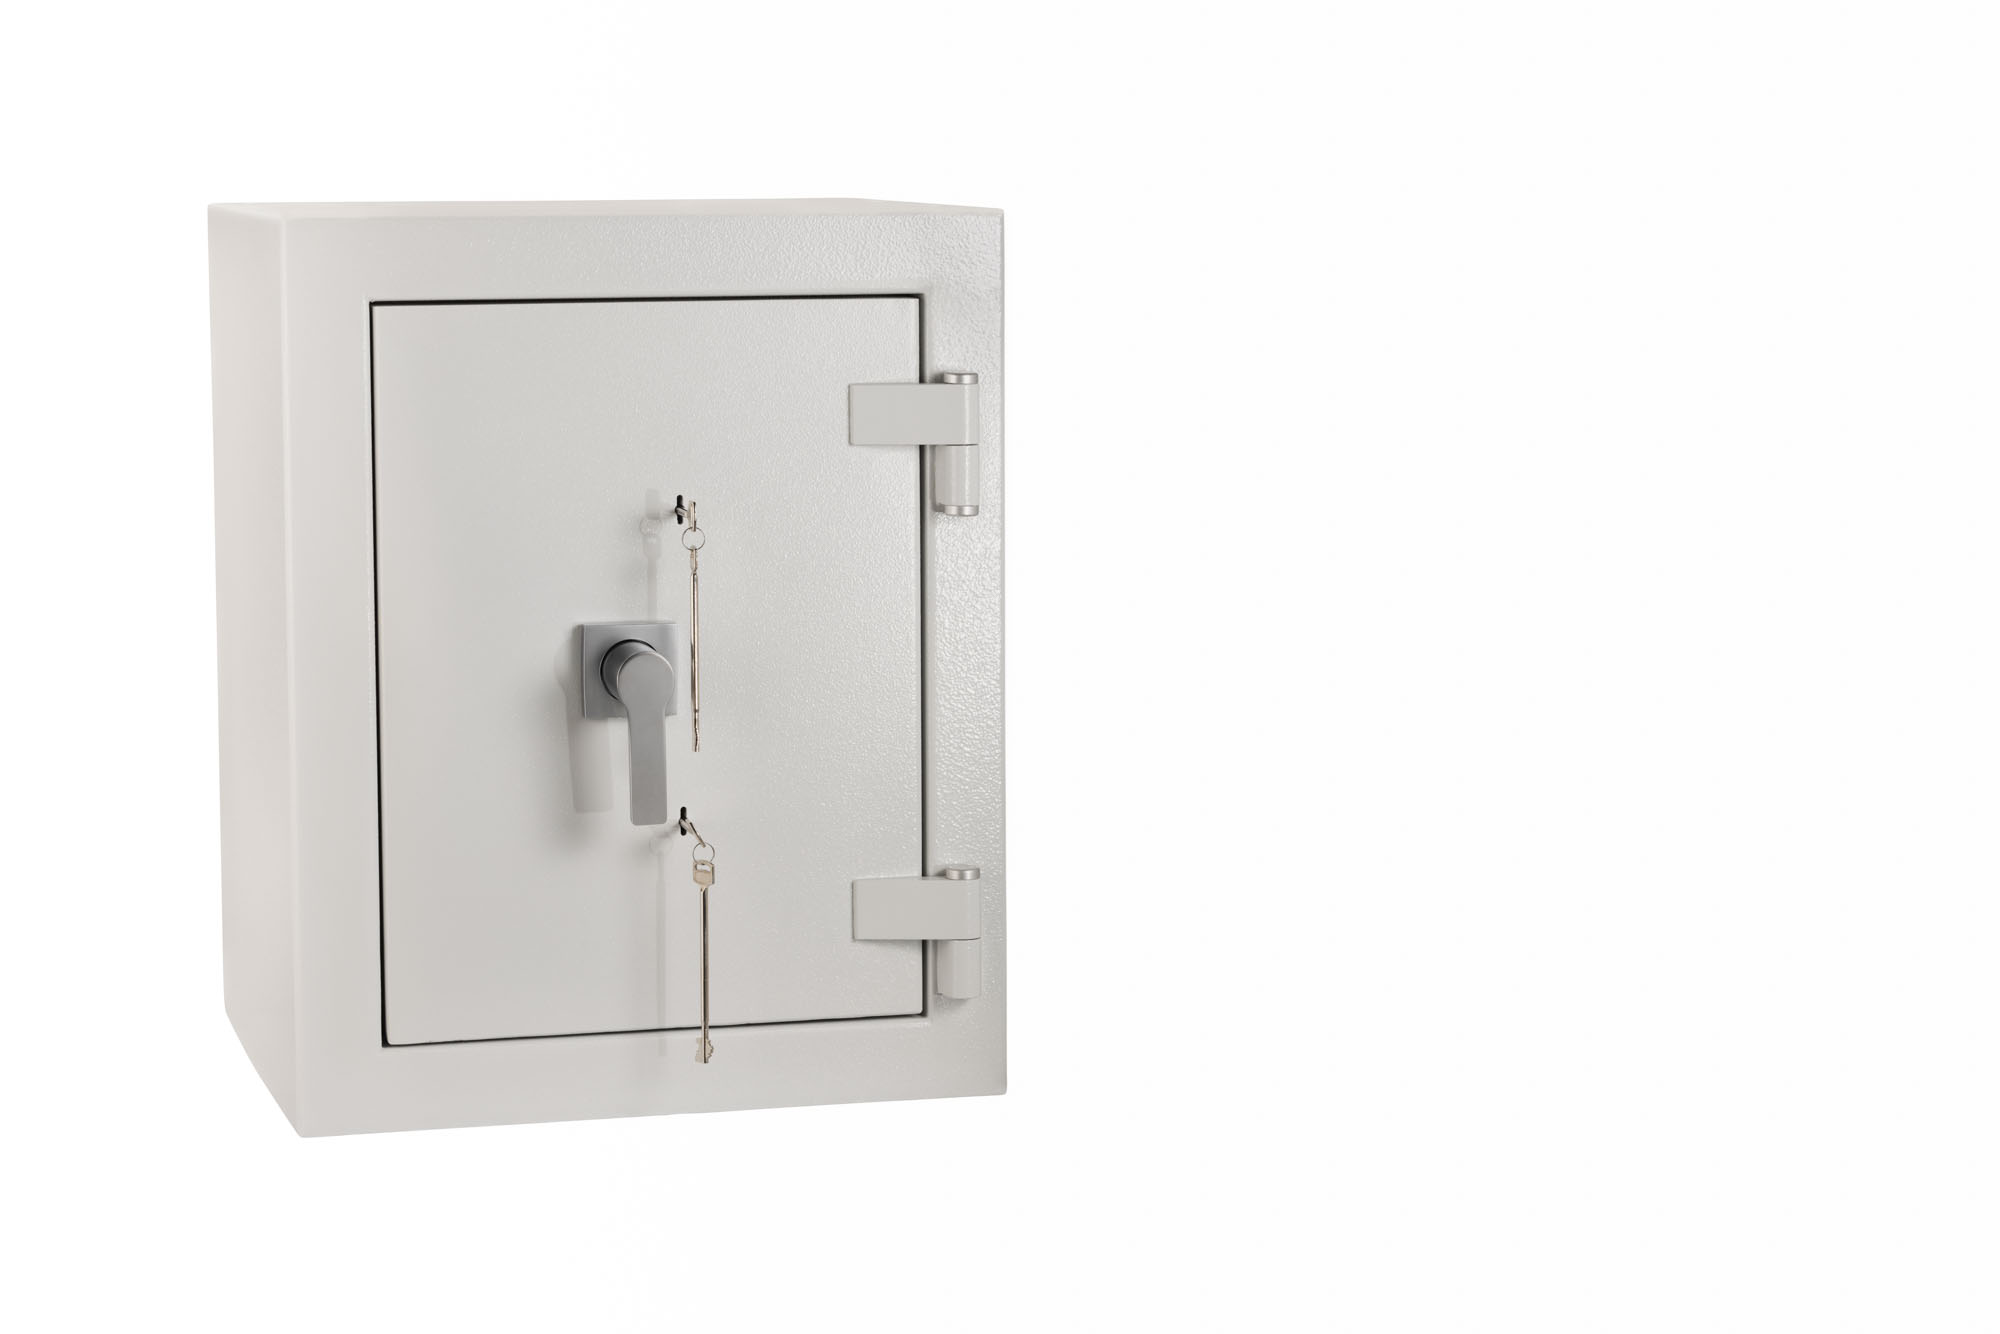 De Raat DRS Prisma grade 4 size 2kk cash safe with two key locks. It is a commercial safe and retailer safe